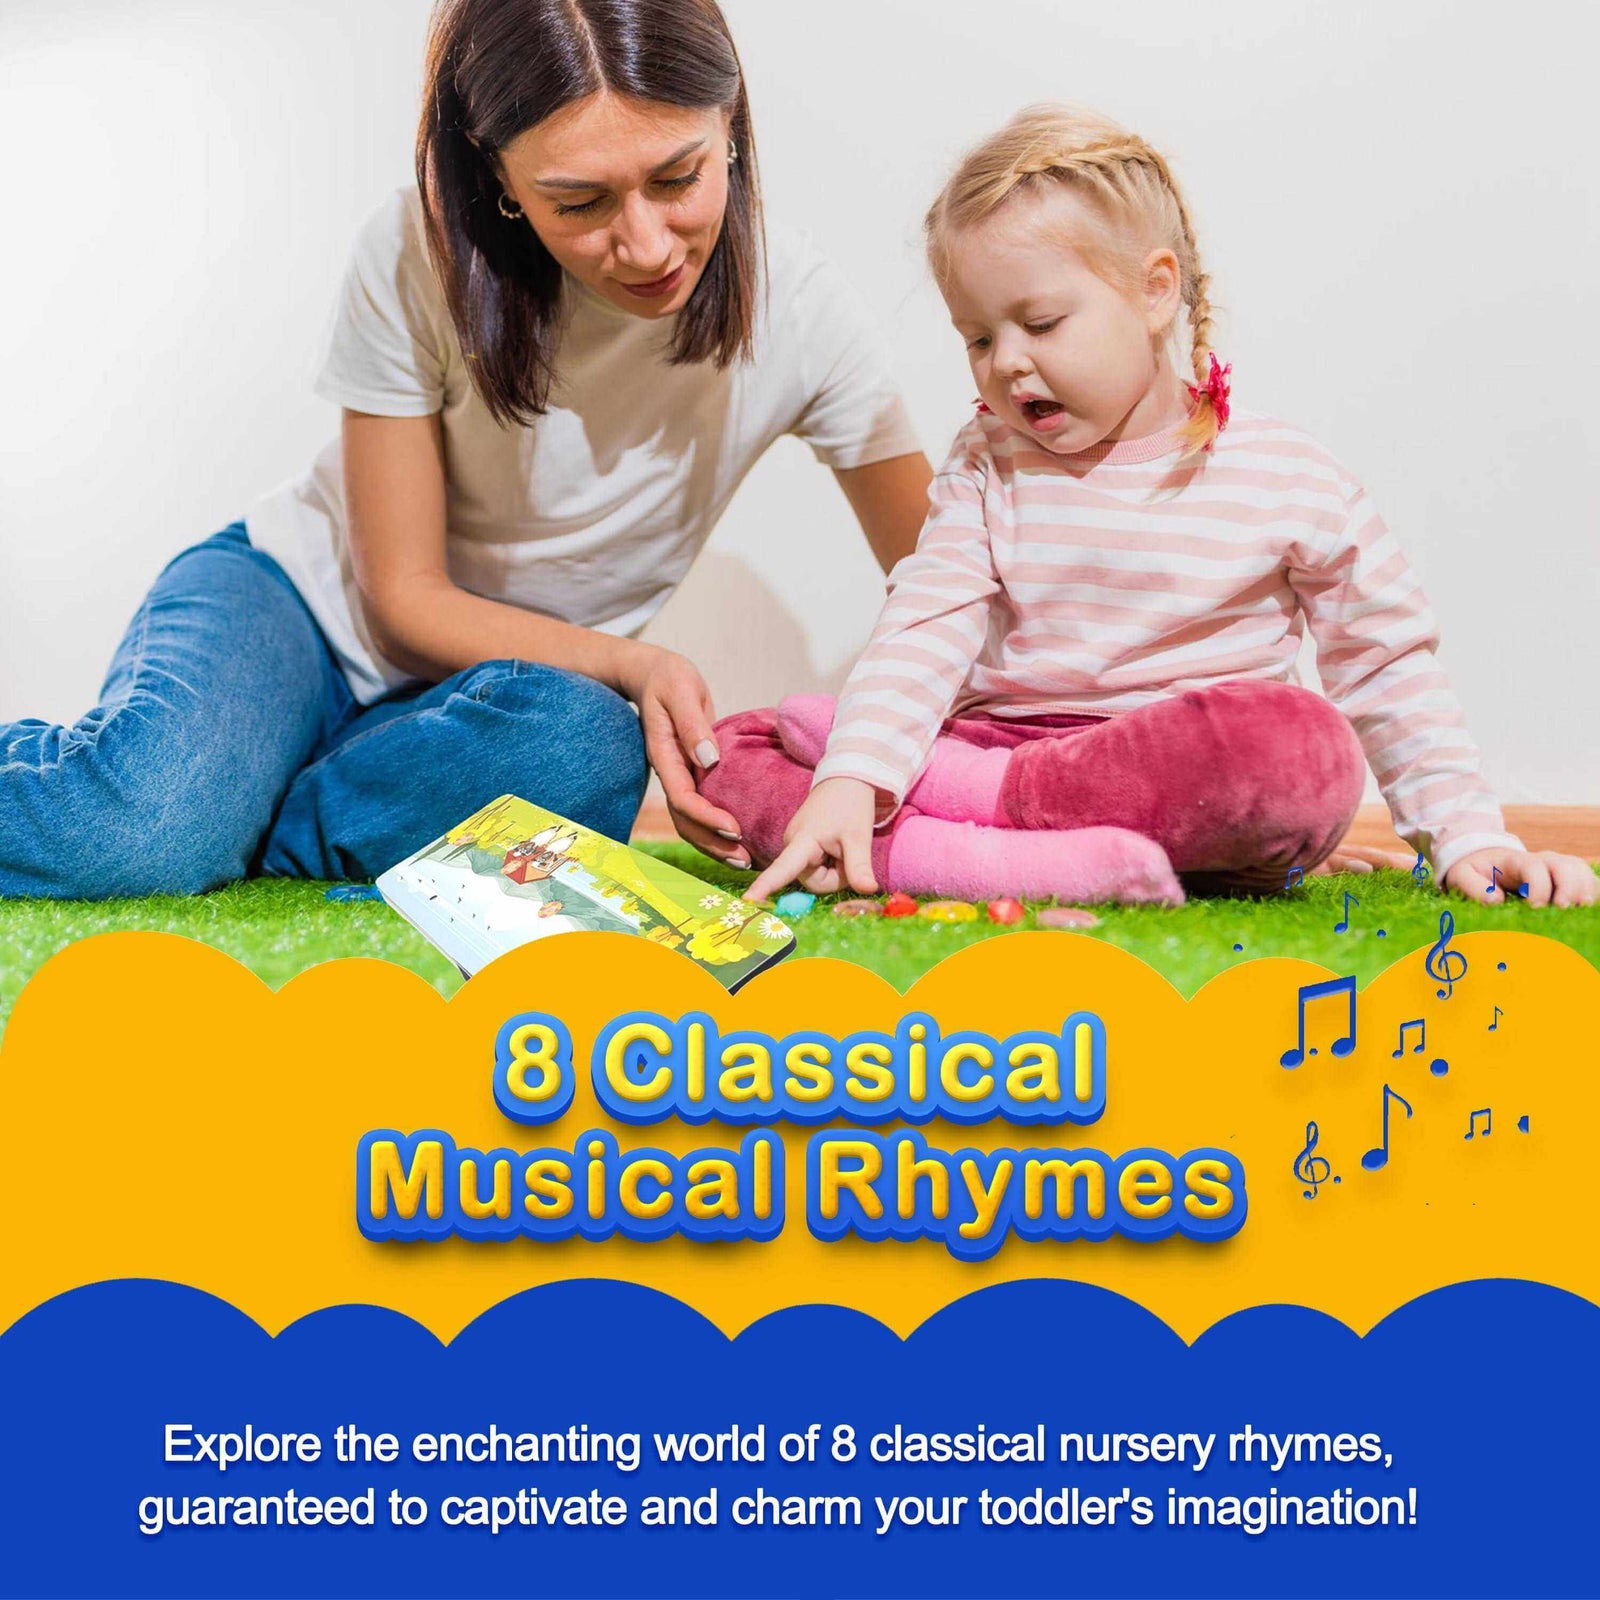 Kiddale English Nursery Rhymes Musical Sound Book for Kids